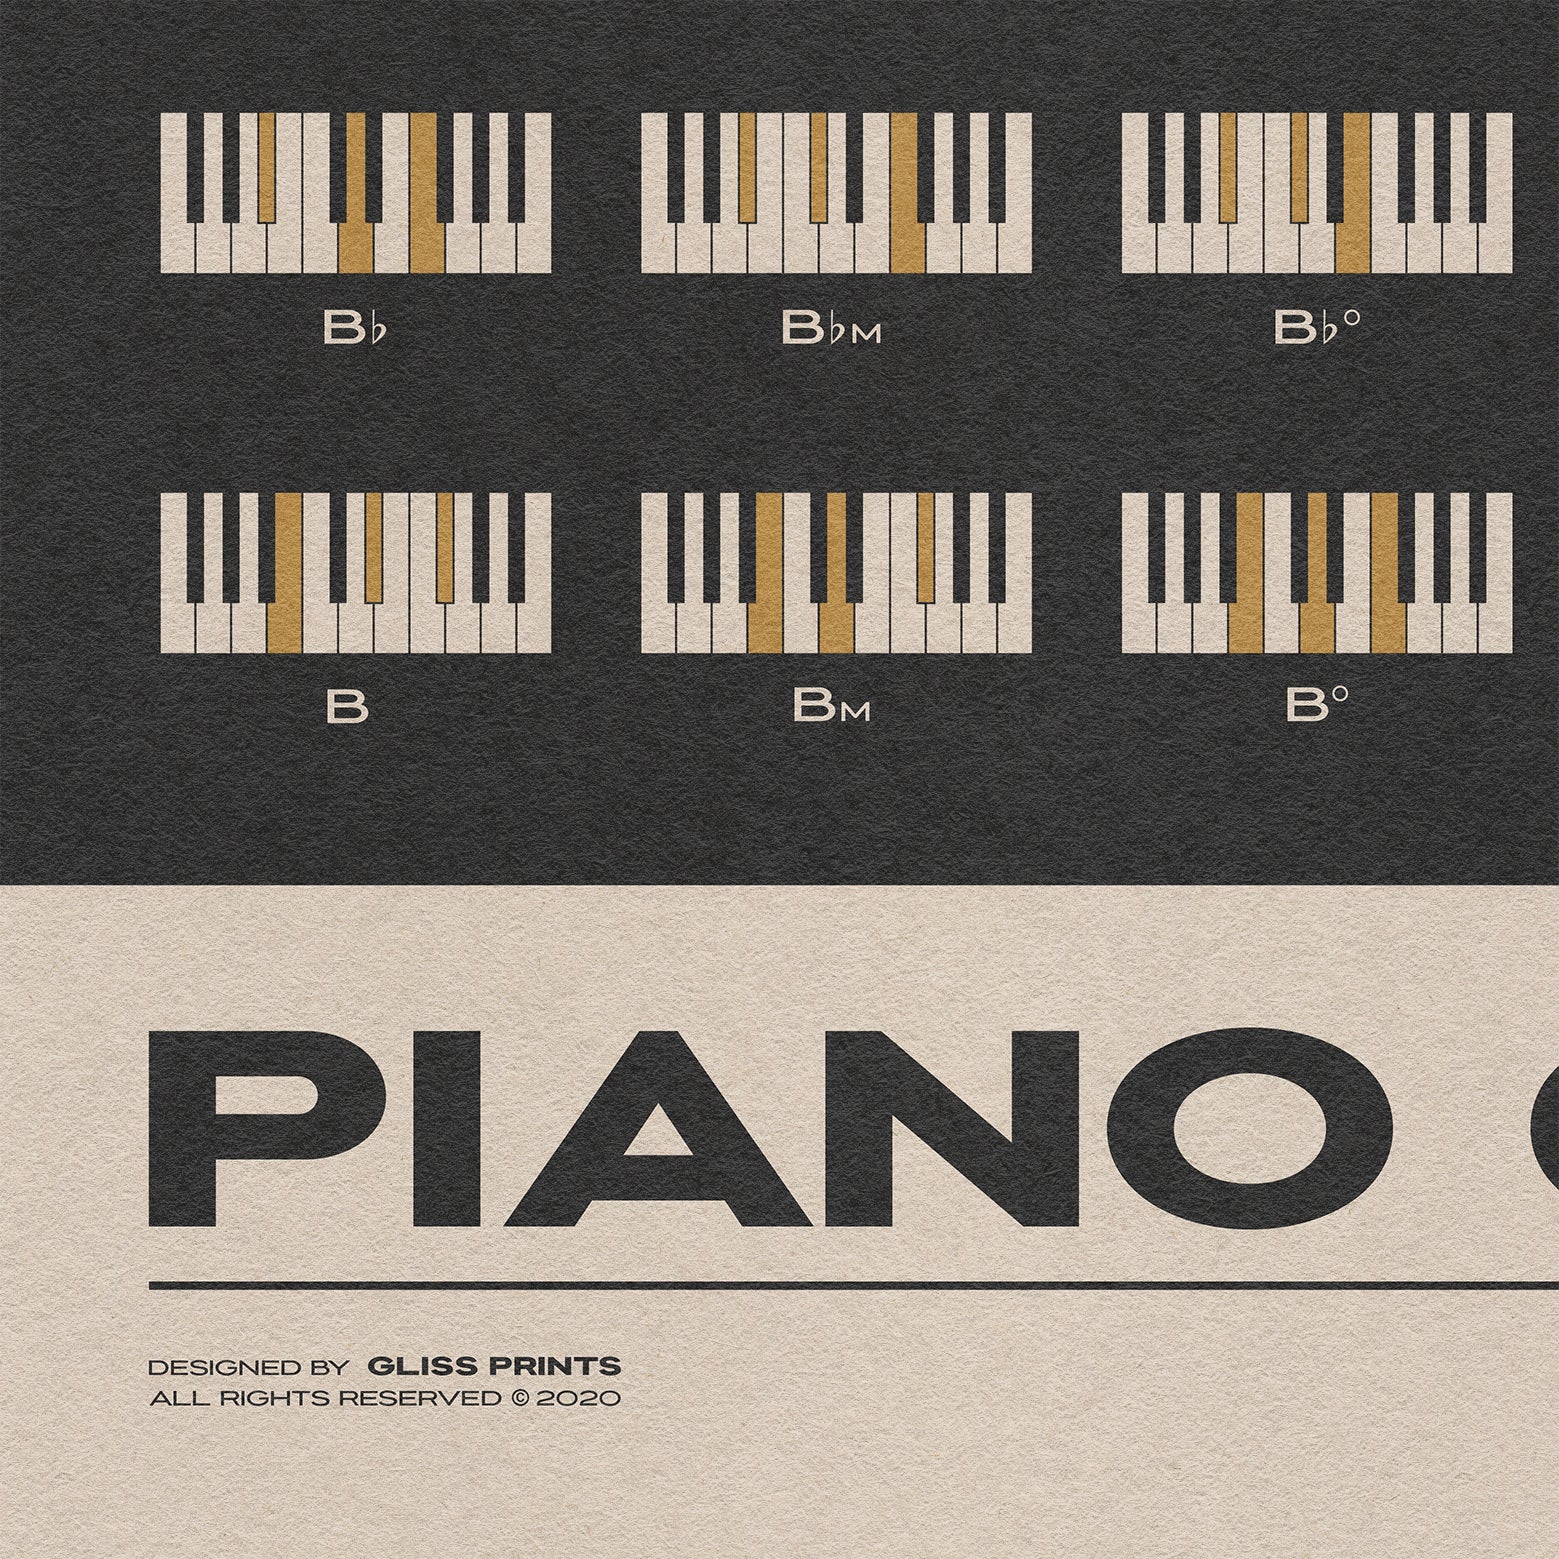 Piano Chords Chart, Black